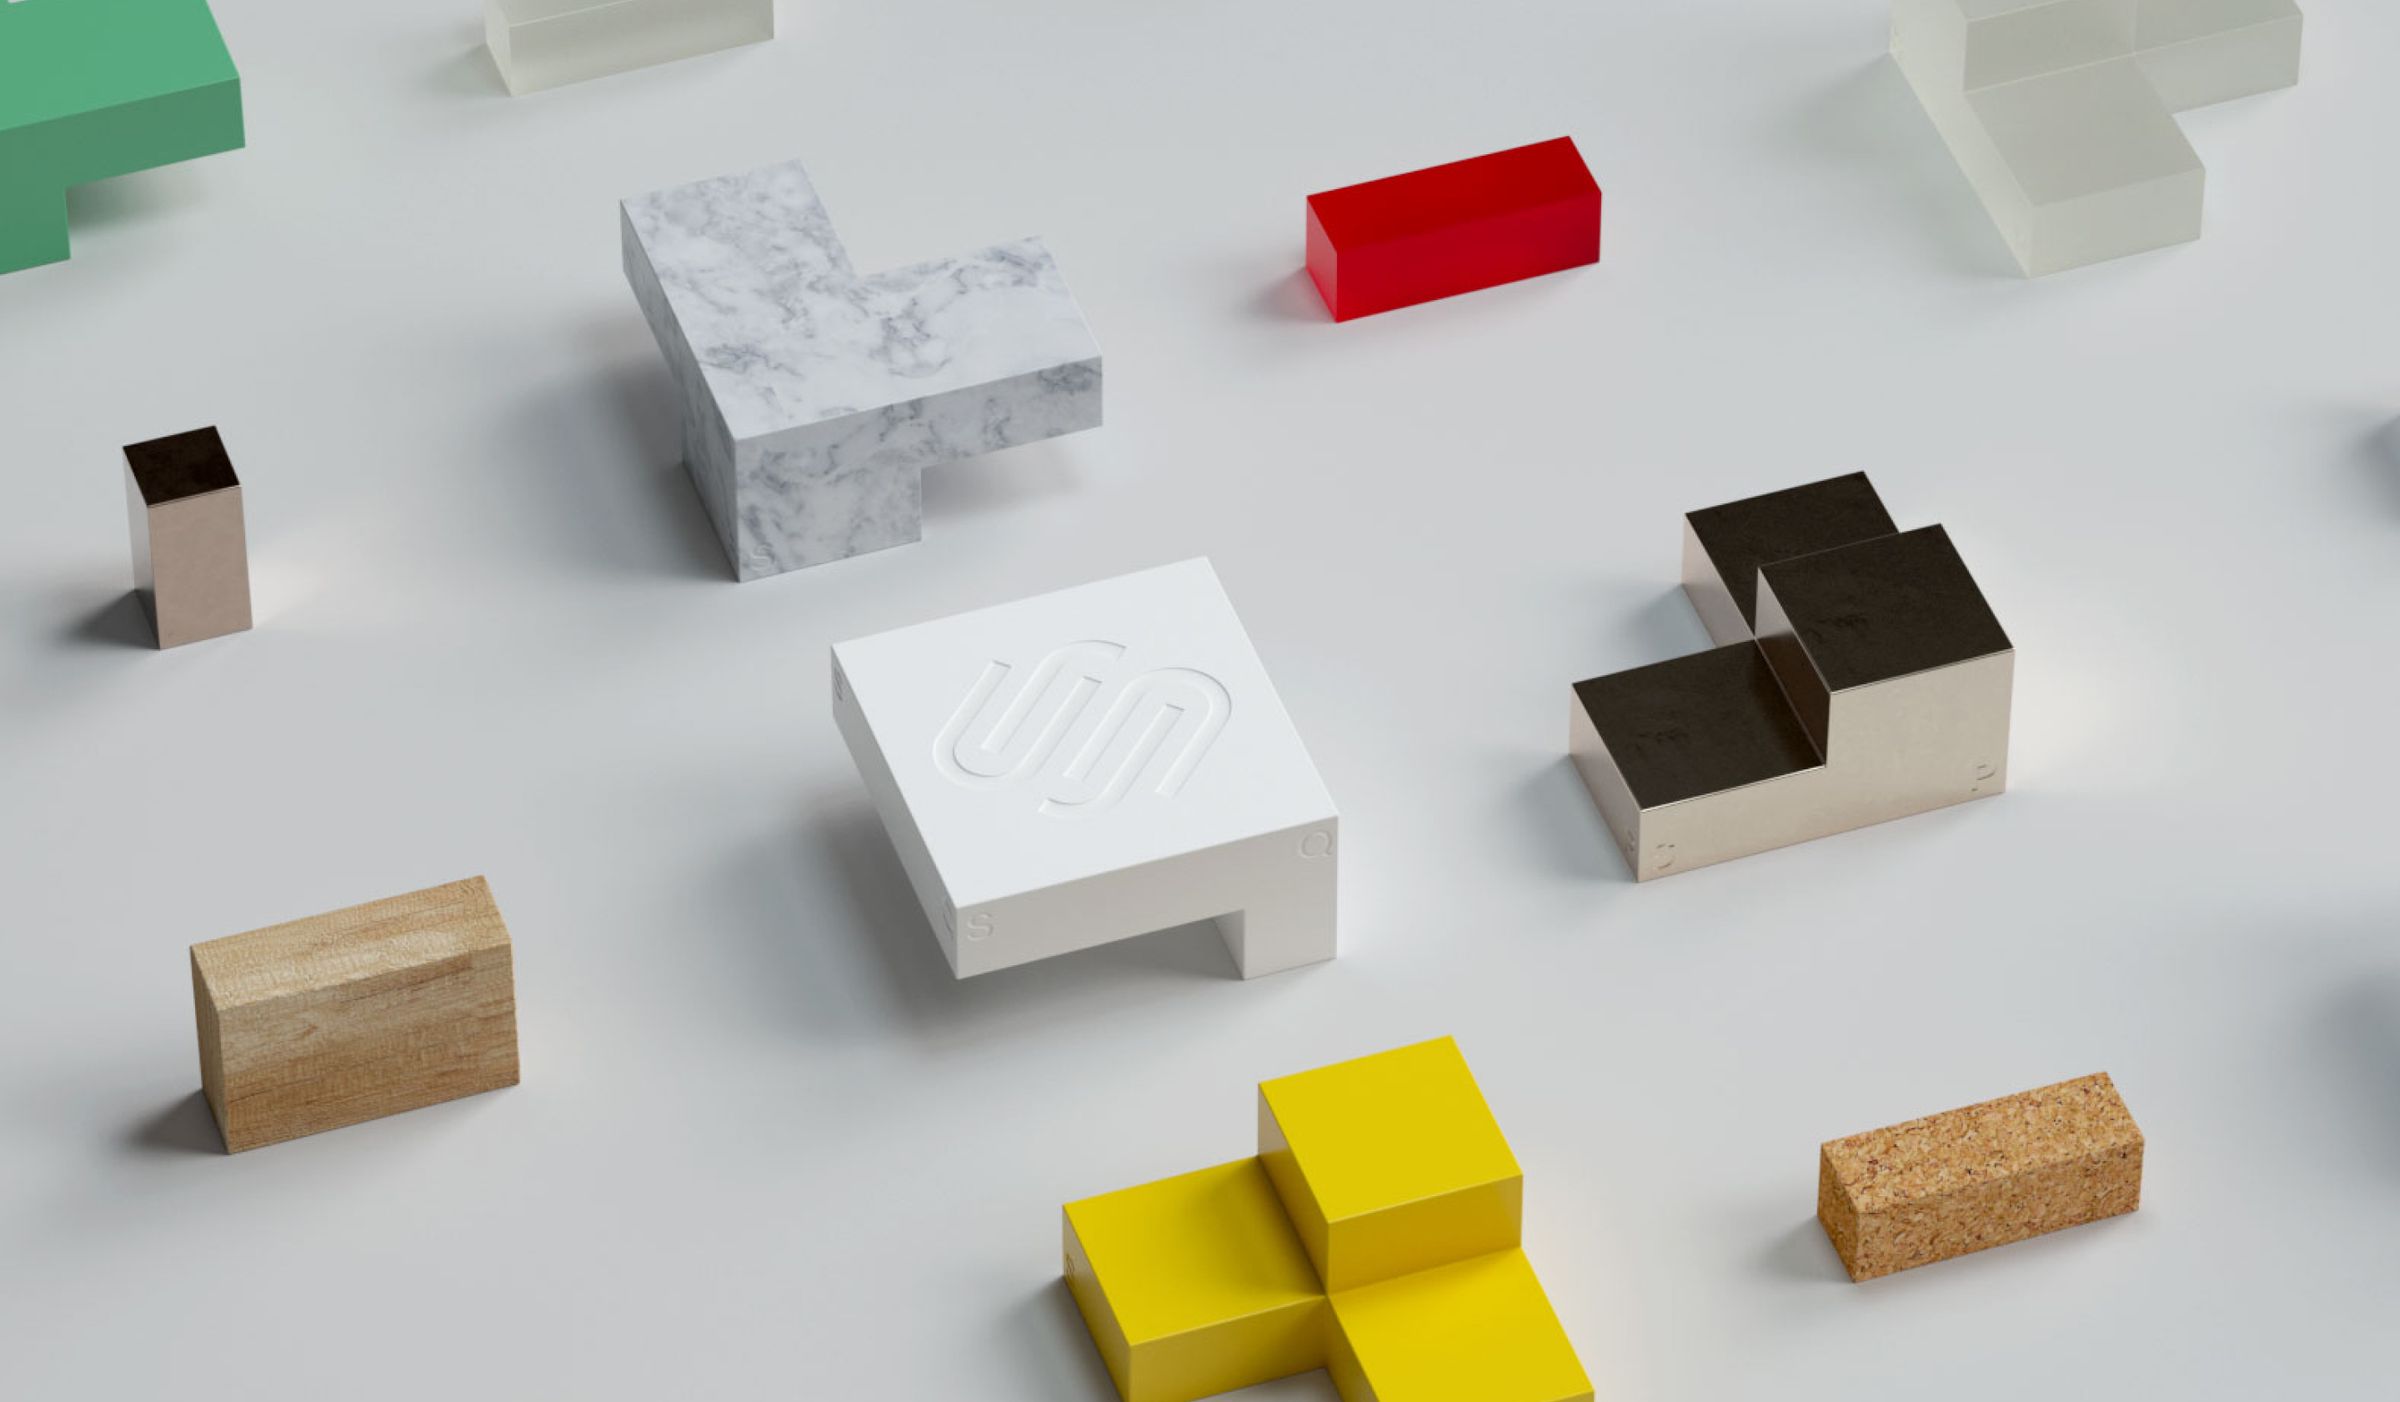 3D renders for Squarespace 'building blocks'